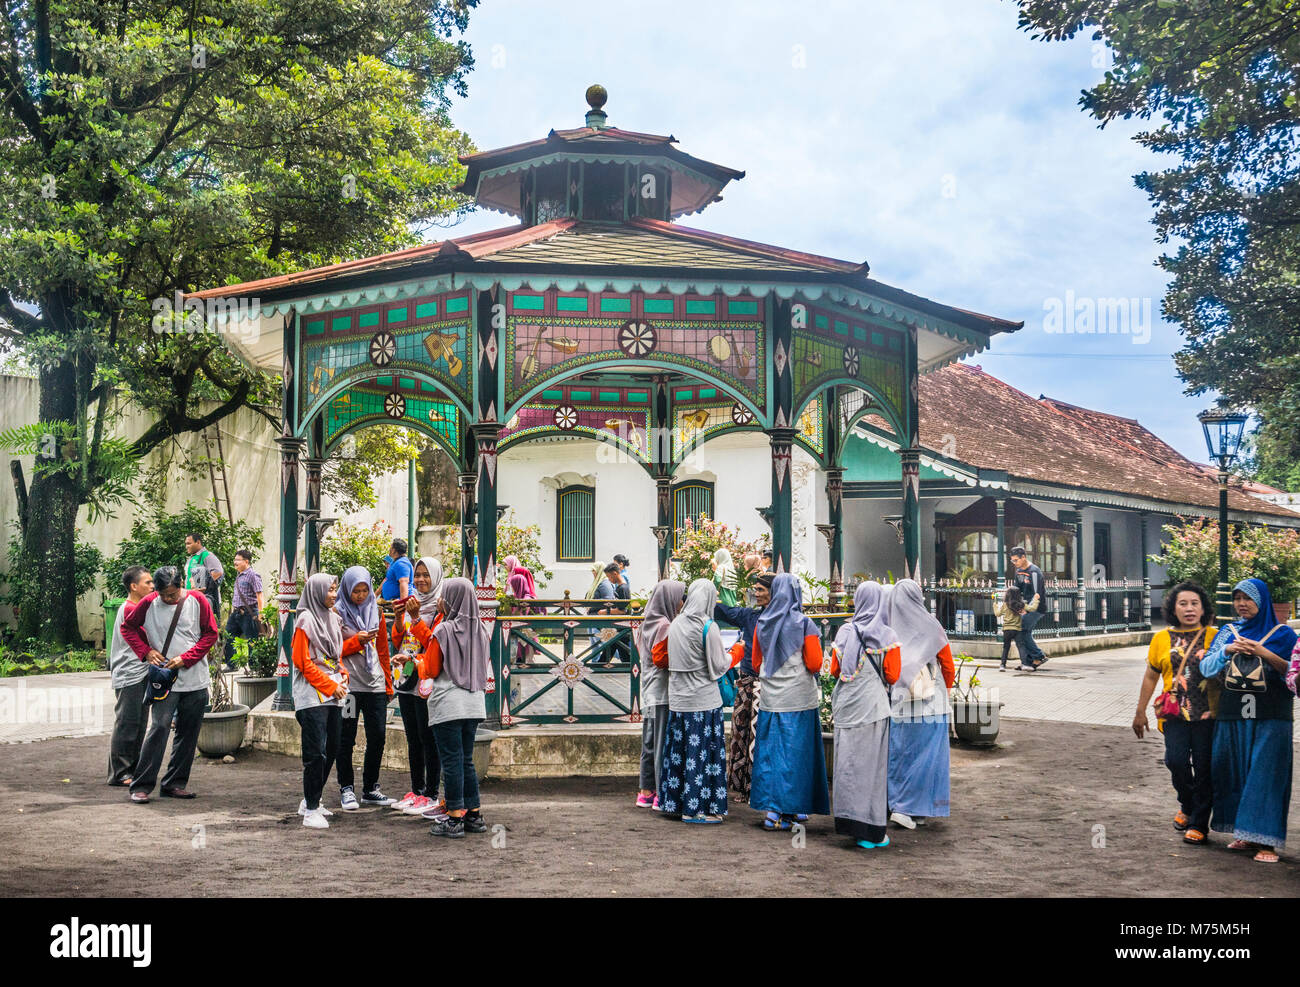 Rotunde Pavillon auf der Kraton Ngayogyakarta Hadiningrat, der Palast des Sultanat Yogyakarta, Java, Indonesien Stockfoto